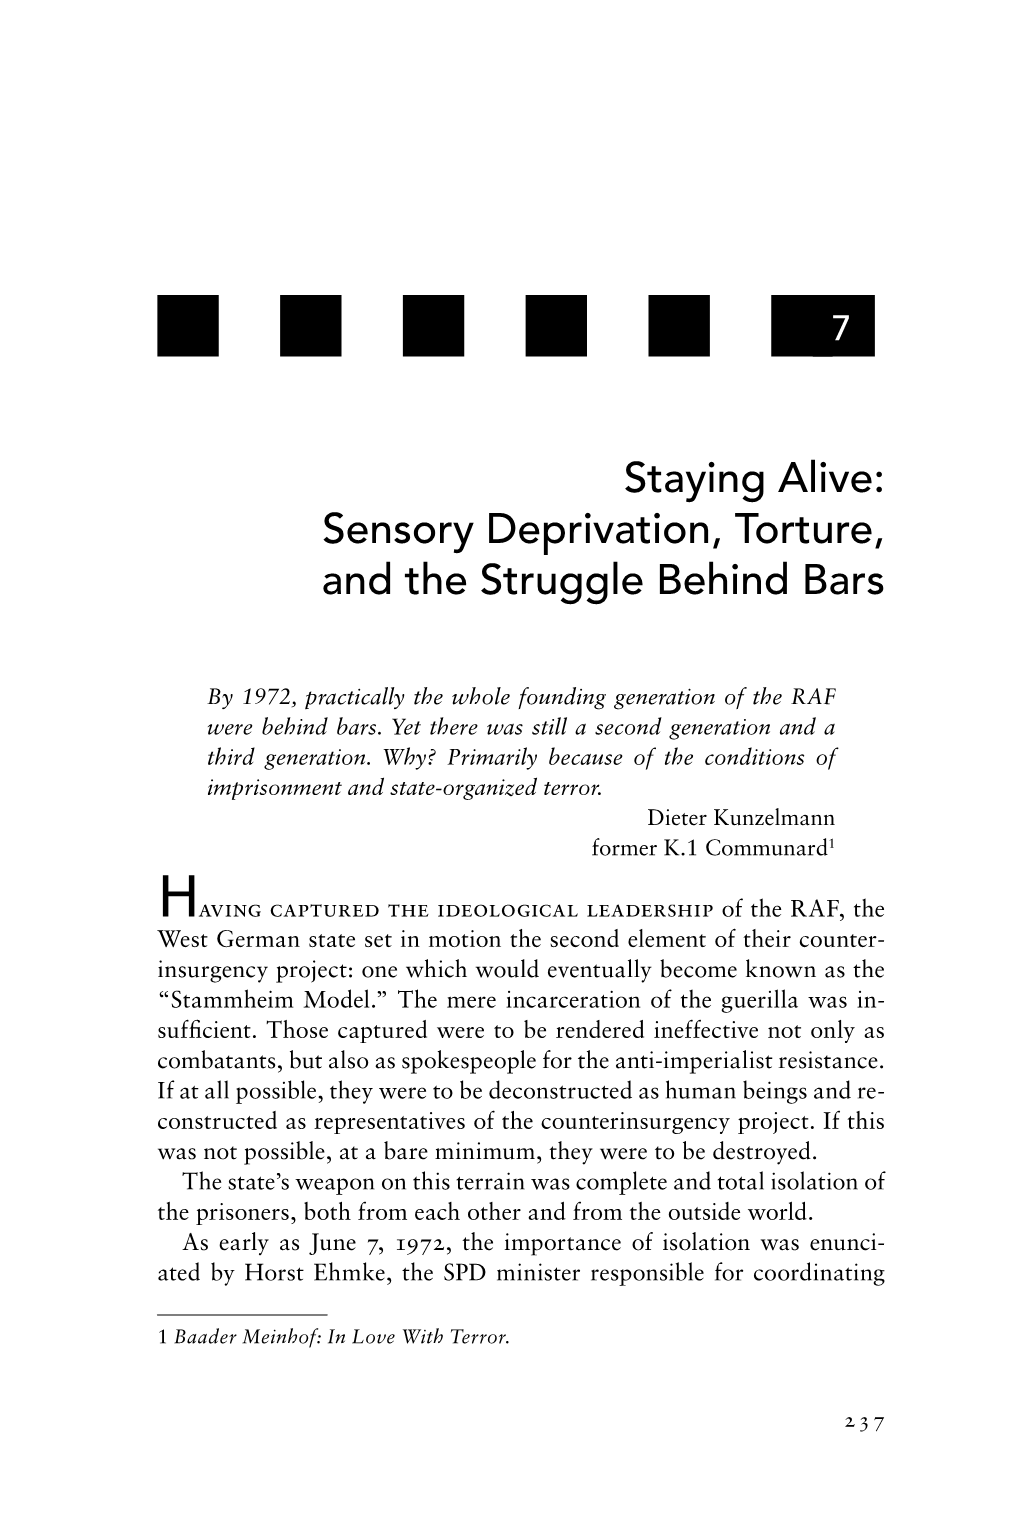 Sensory Deprivation, Torture, and the Struggle Behind Bars